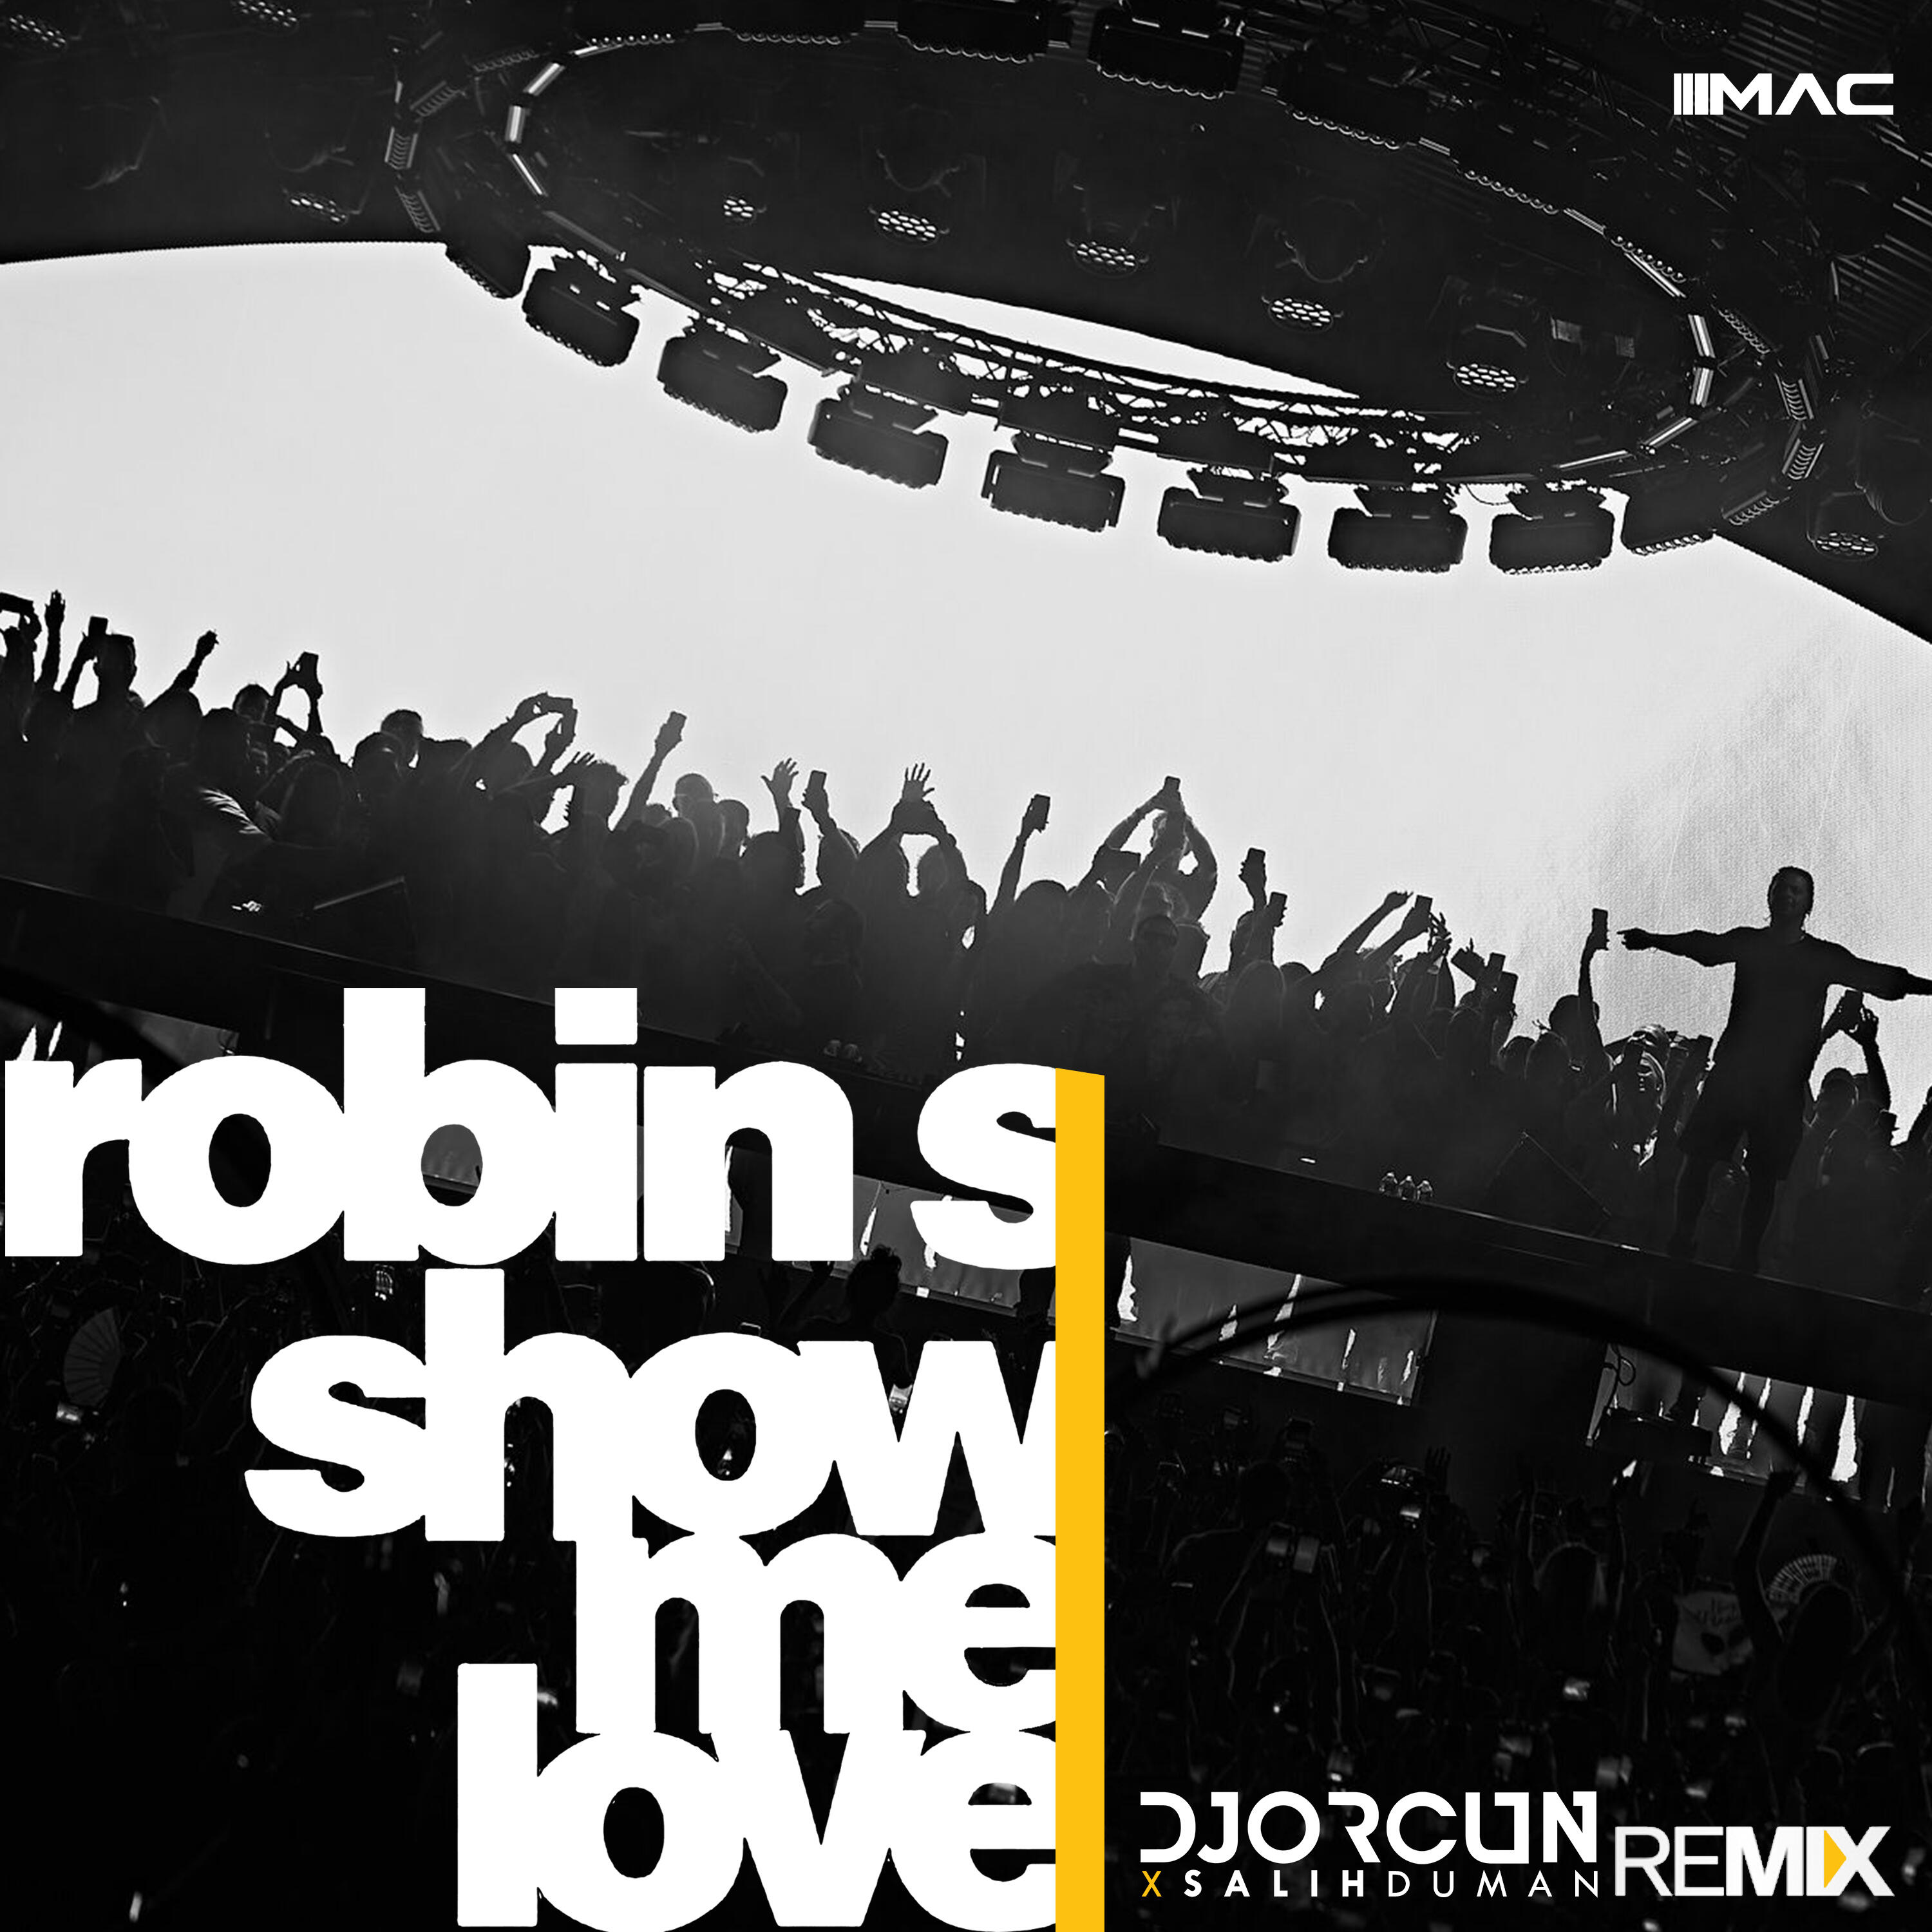 Stream Robin S - Show Me Love (KREAM Remix) by LIQUID : LAB